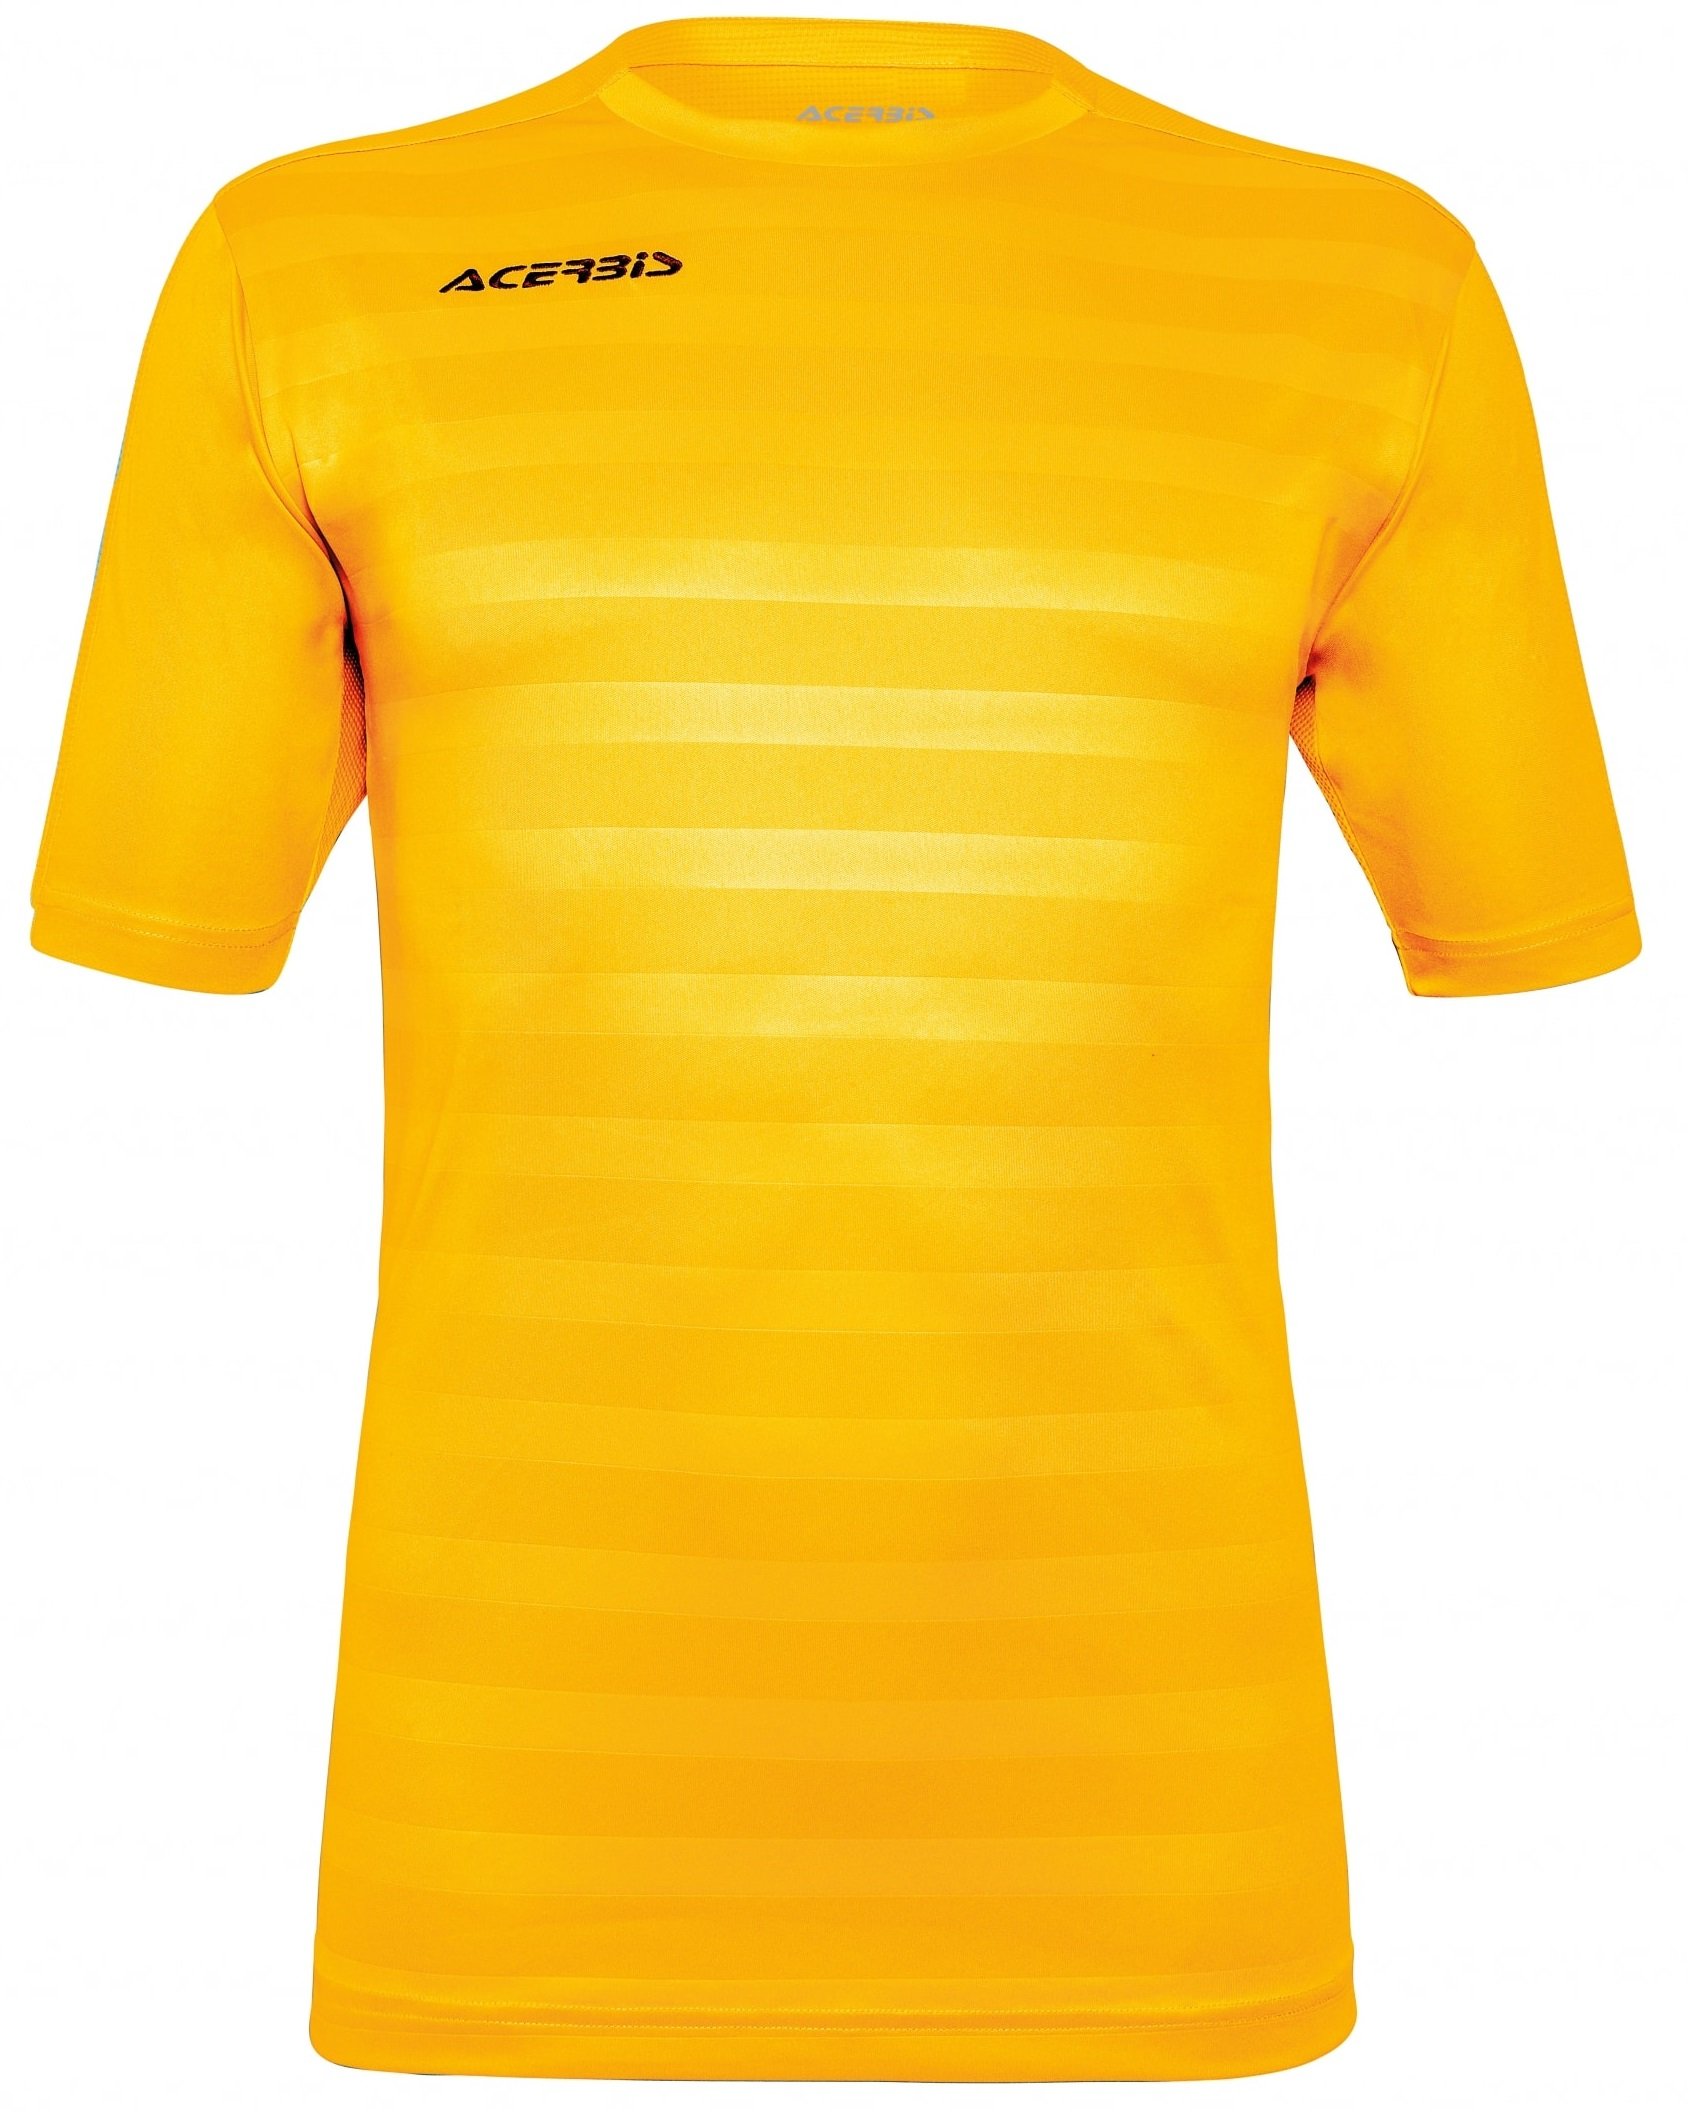 Camiseta técnica Yellow Fade E - Trail Mujer